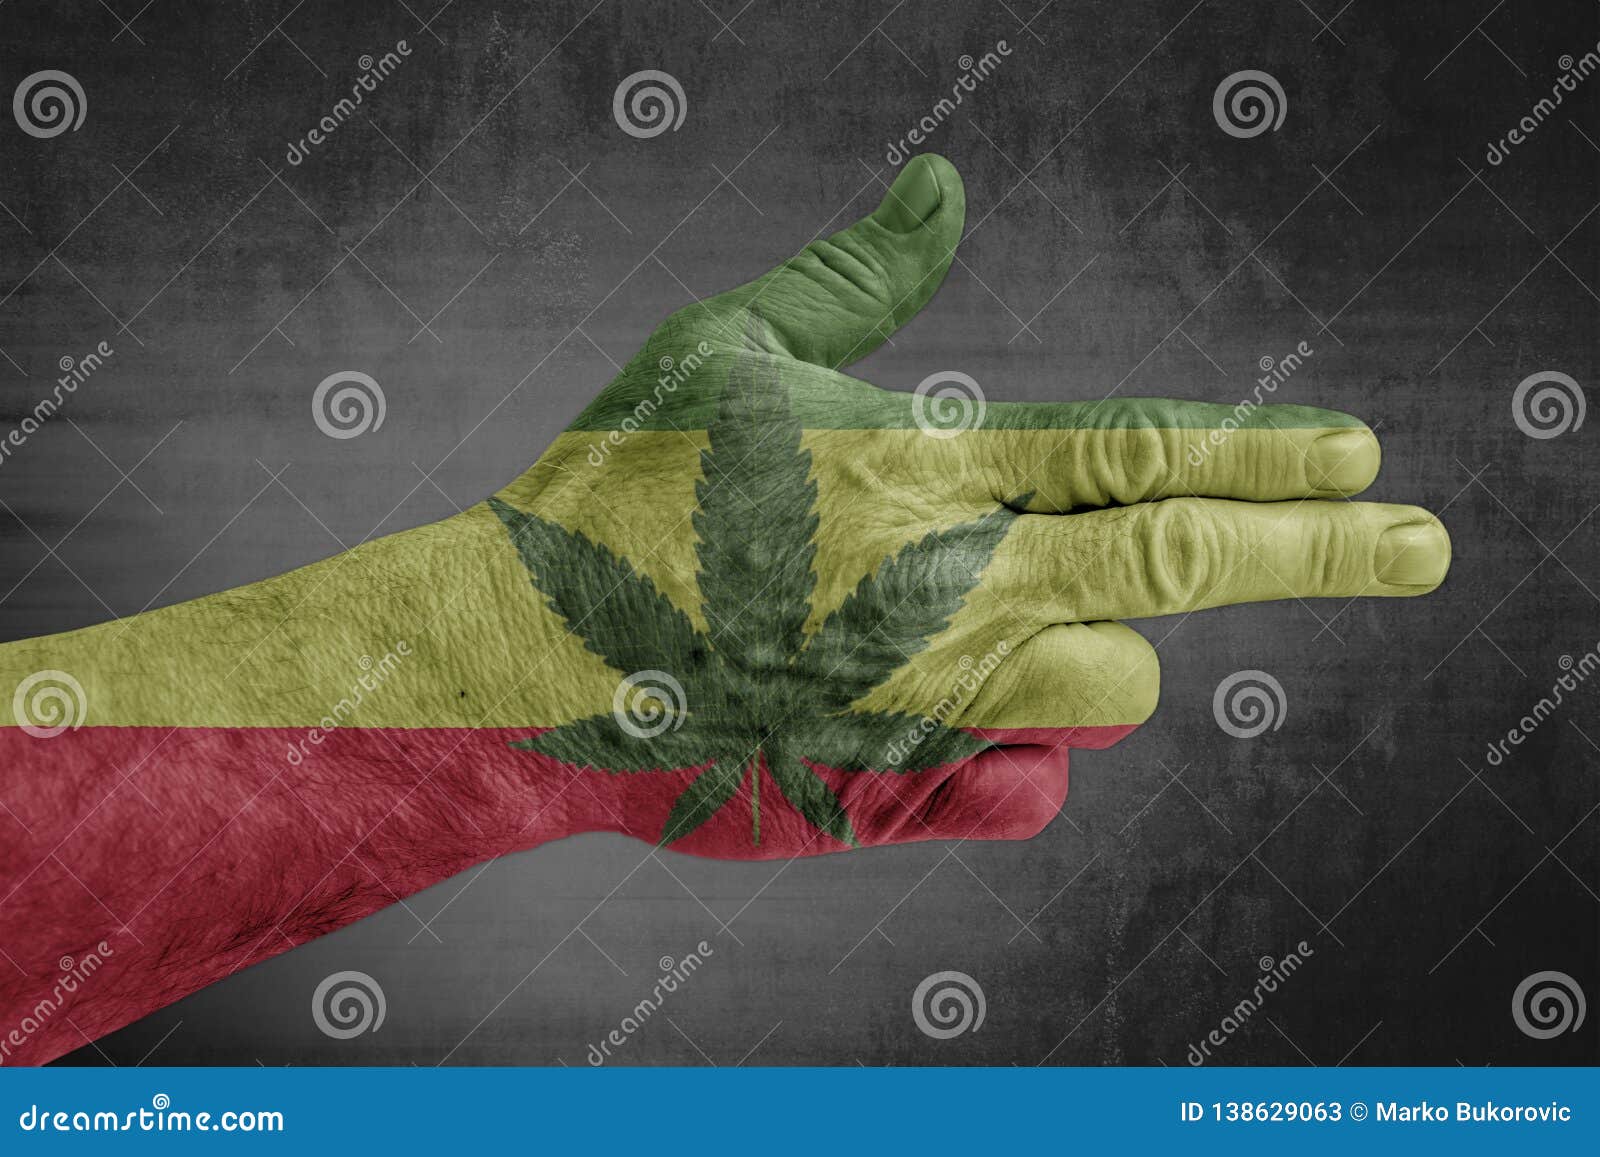 rasta flag painted on male hand like a gun